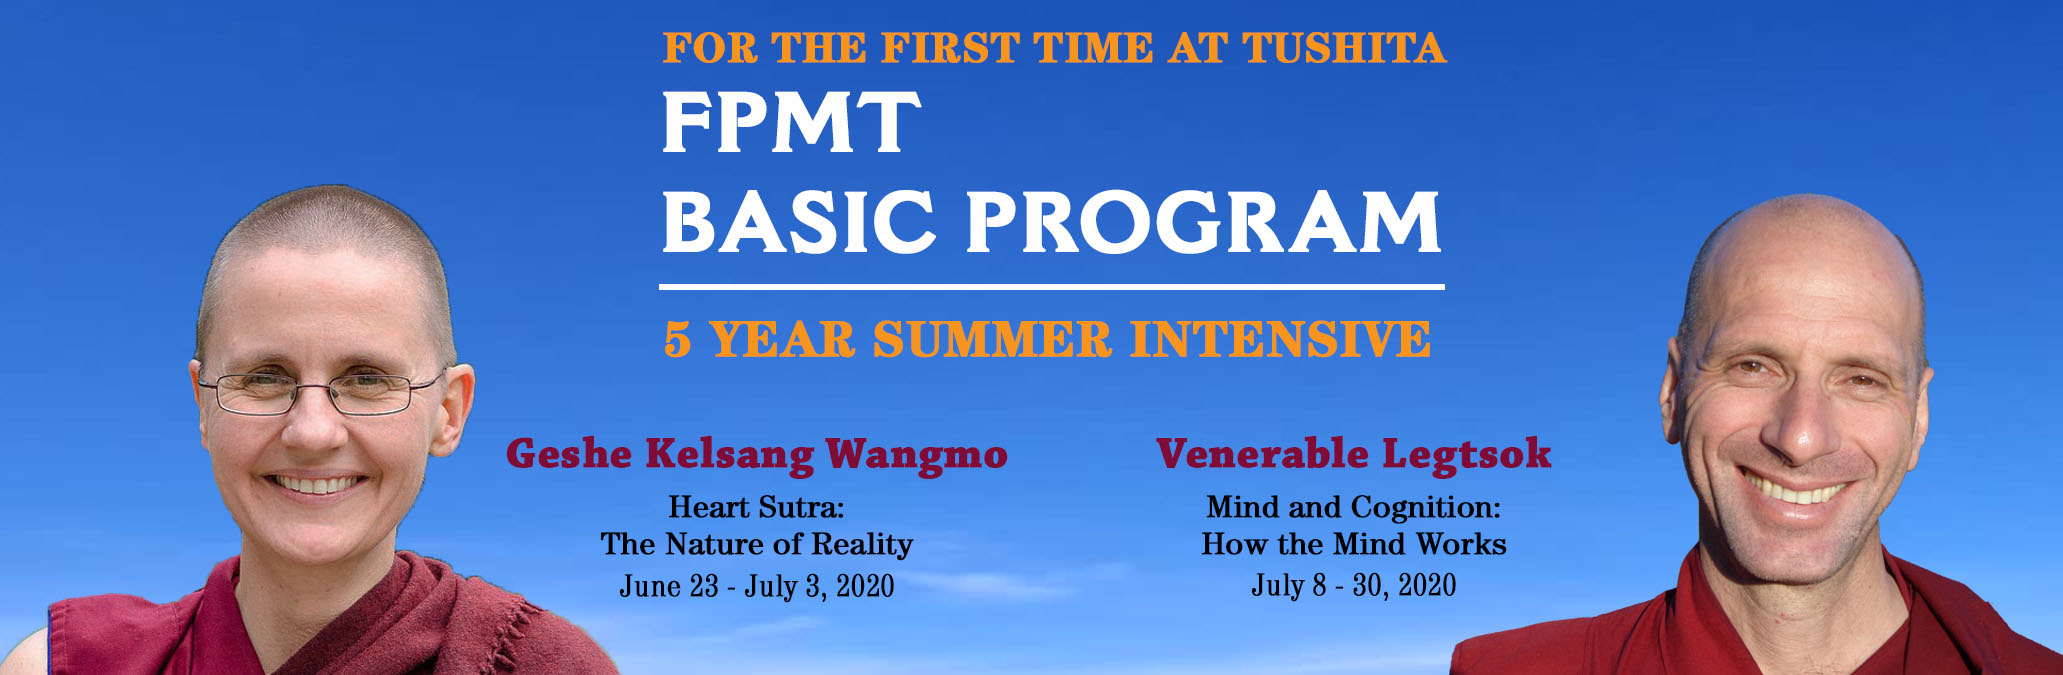 First FPMT Basic Program at Tushita!